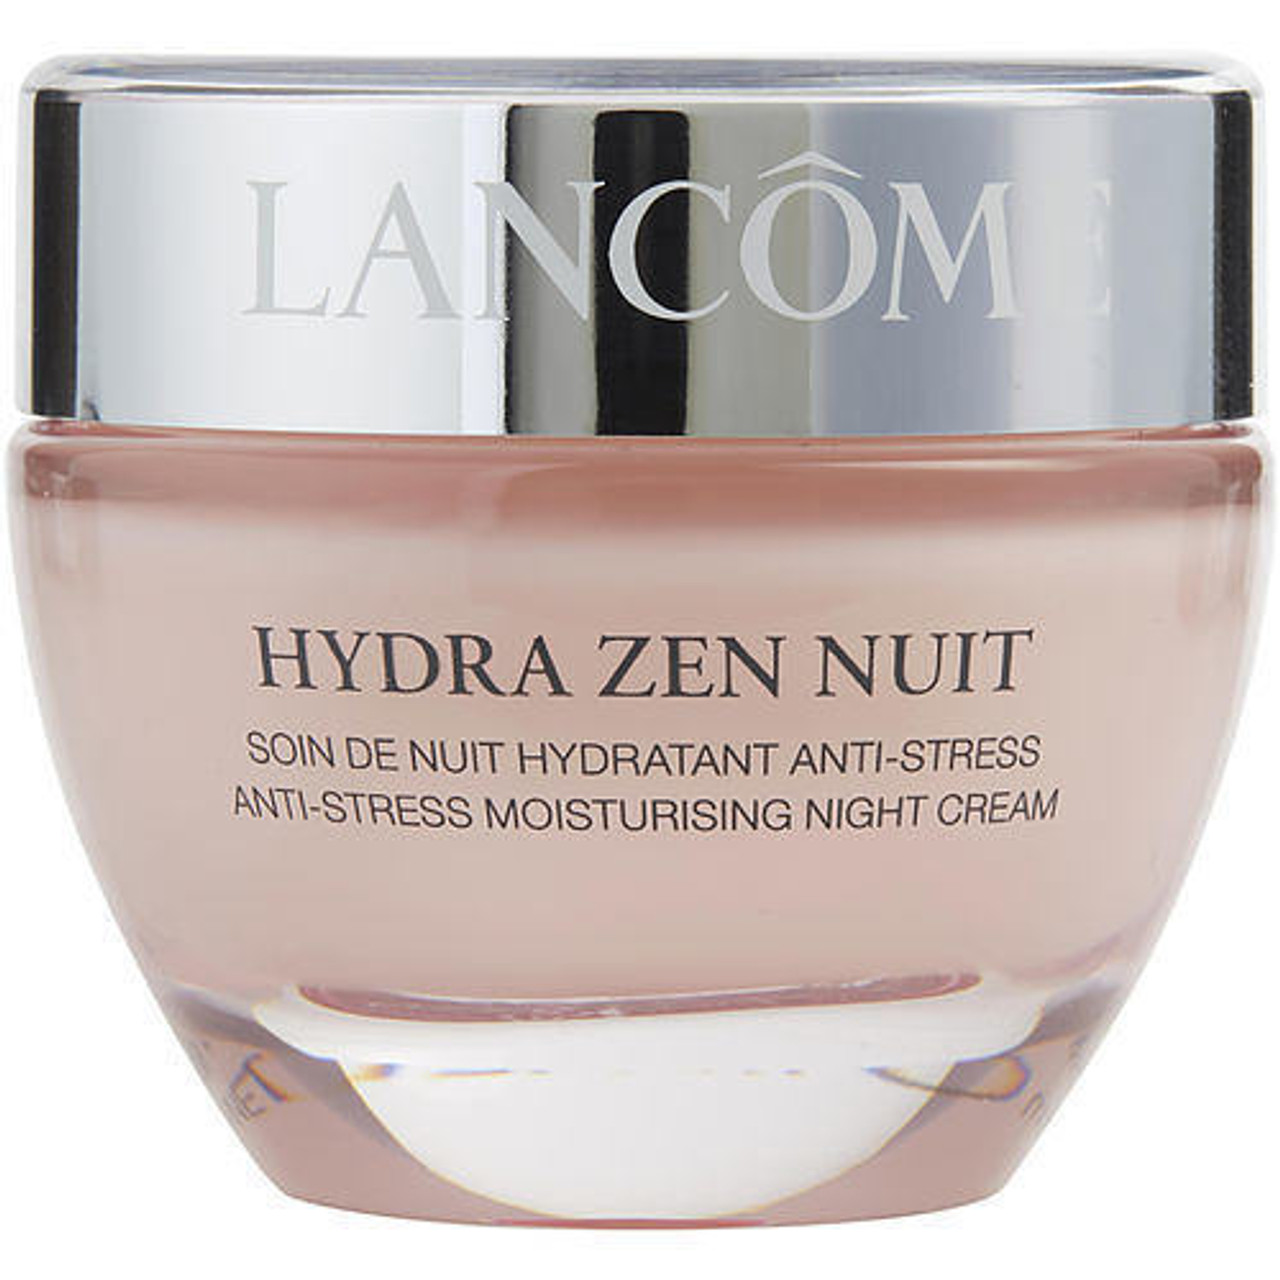 Lancome Hydrazen Anti-Stress Moisturising Night Cream